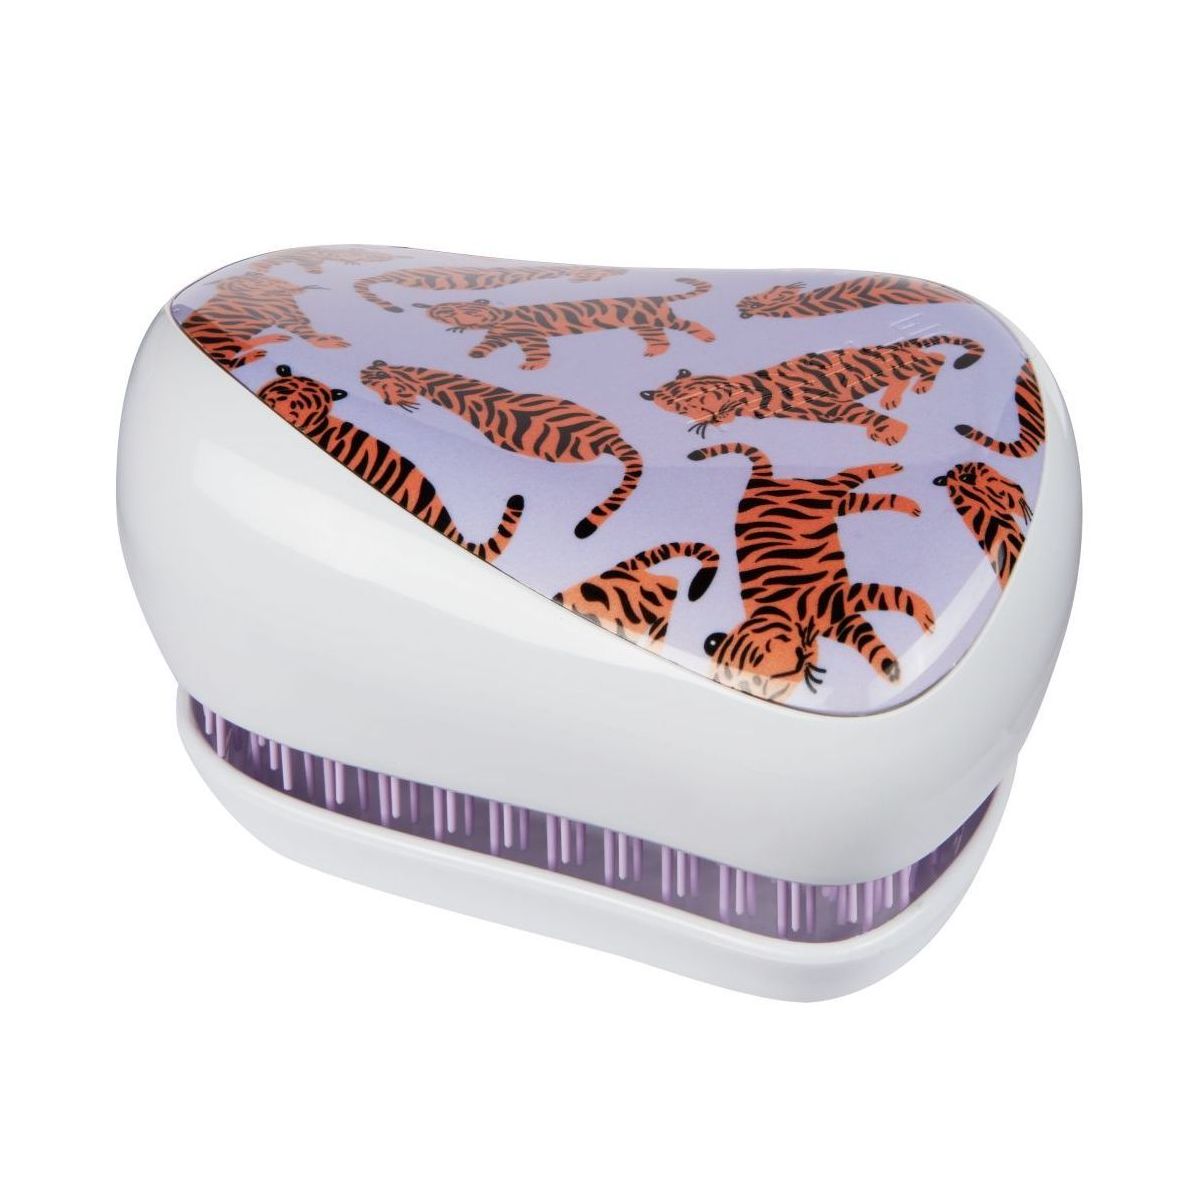 Tangle Teezer Compact Styler Hair Brush - Skinny Dip Trendy Tiger